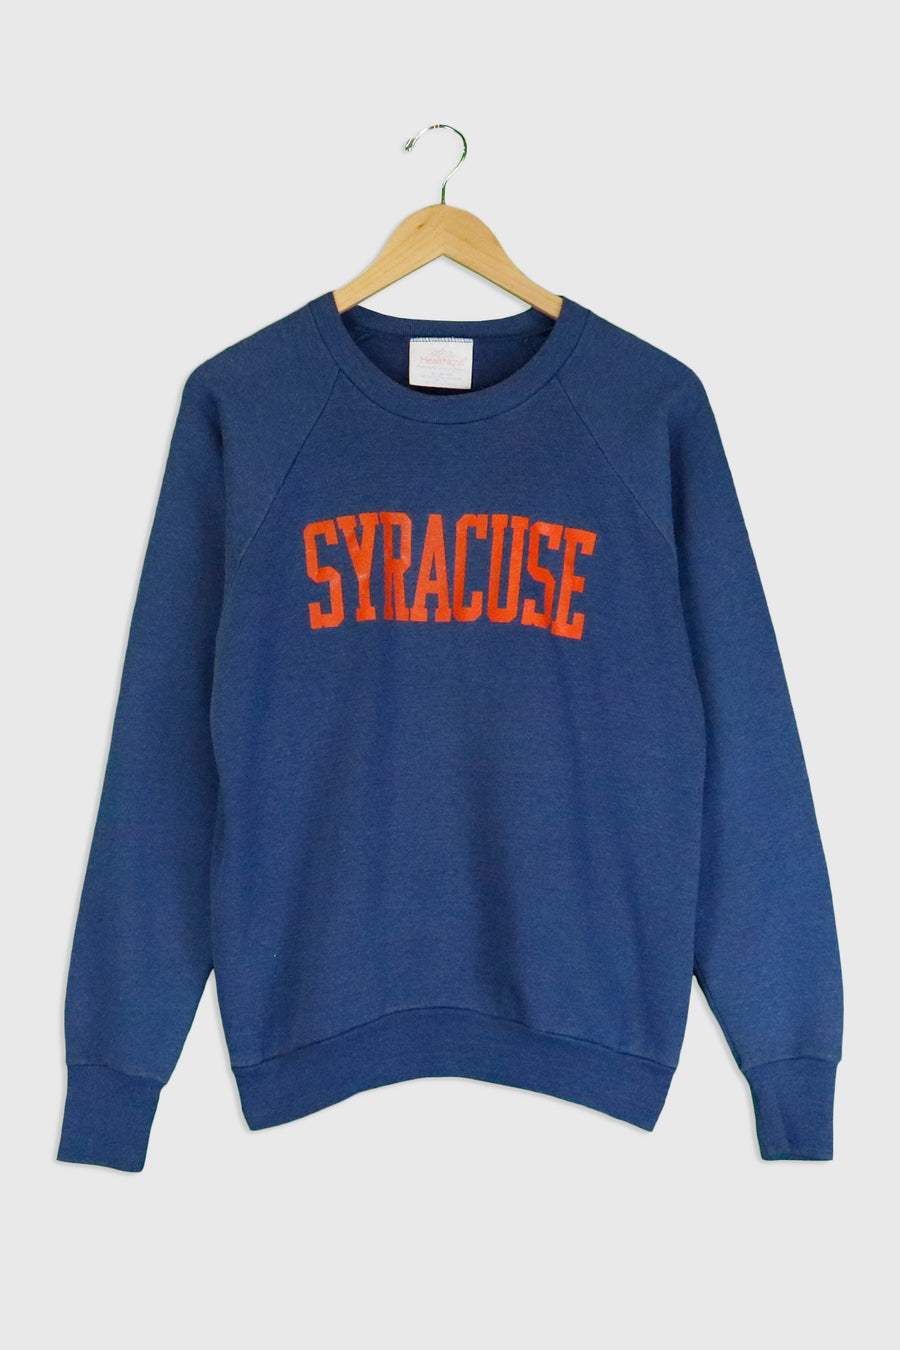 Vintage Syracuse Orange Crewneck Sweatshirt Sz XL